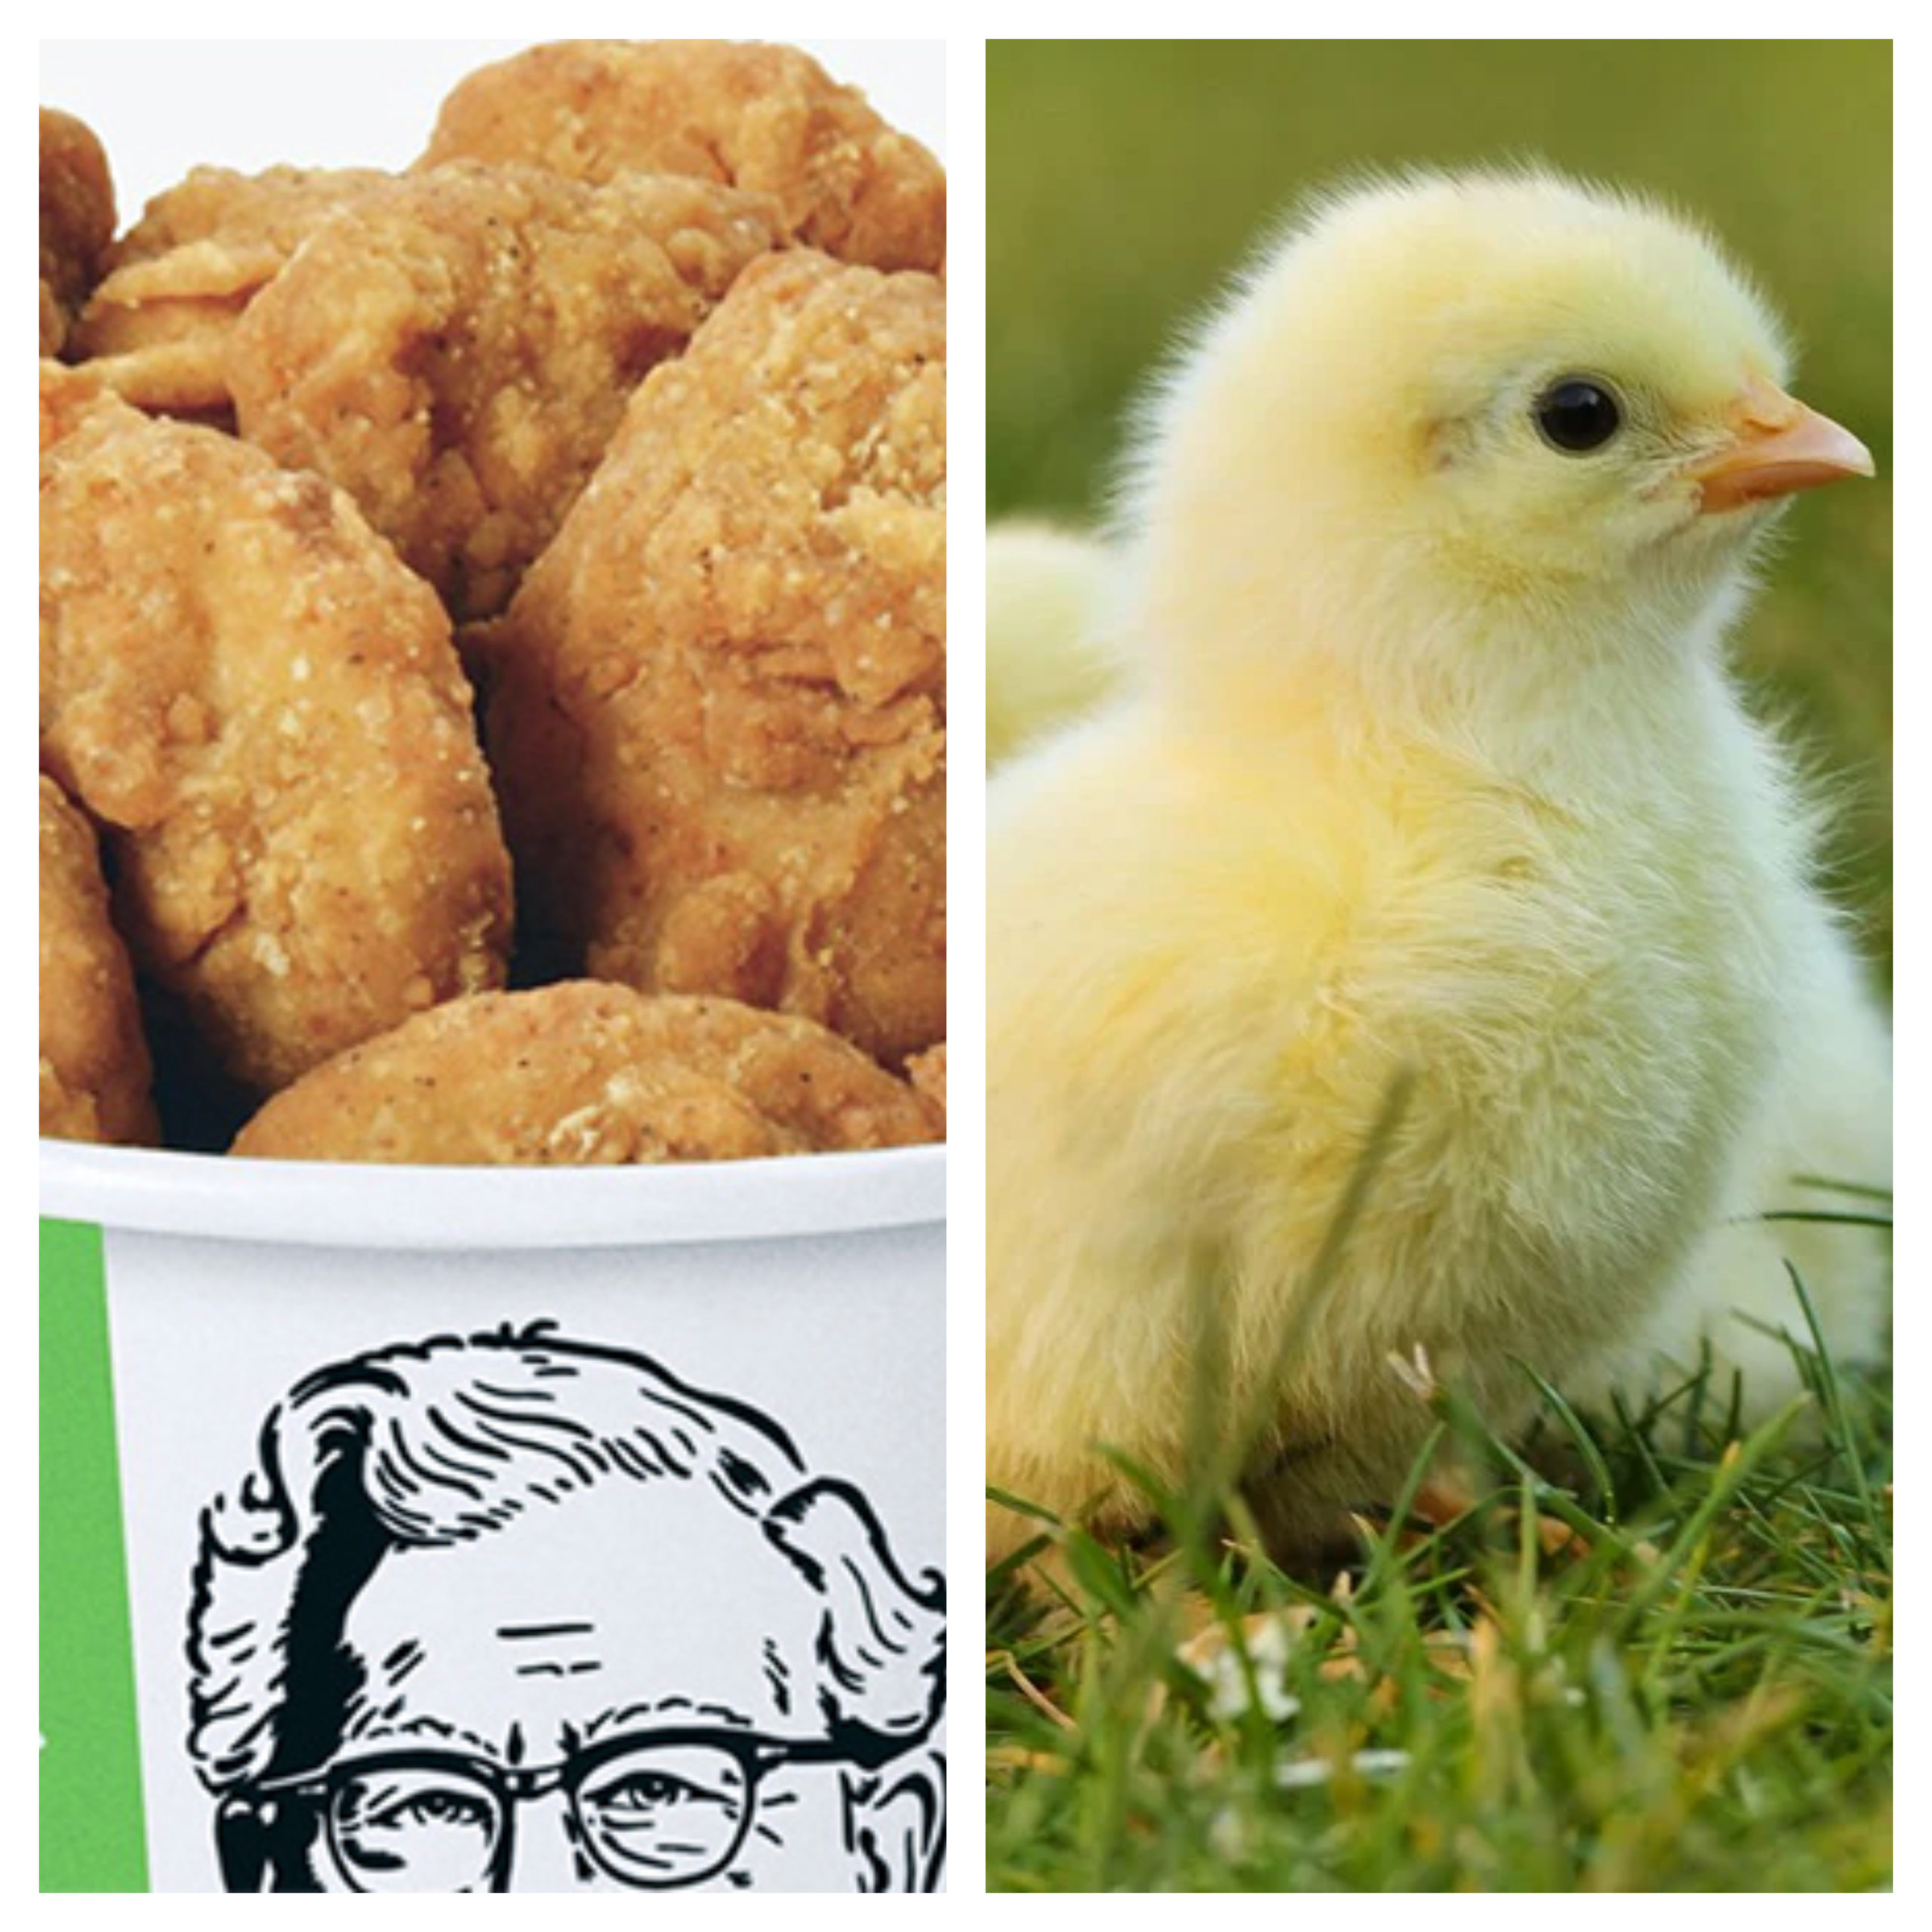 Nuevo menú: “Pollo frito vegano” en cadenas KFC